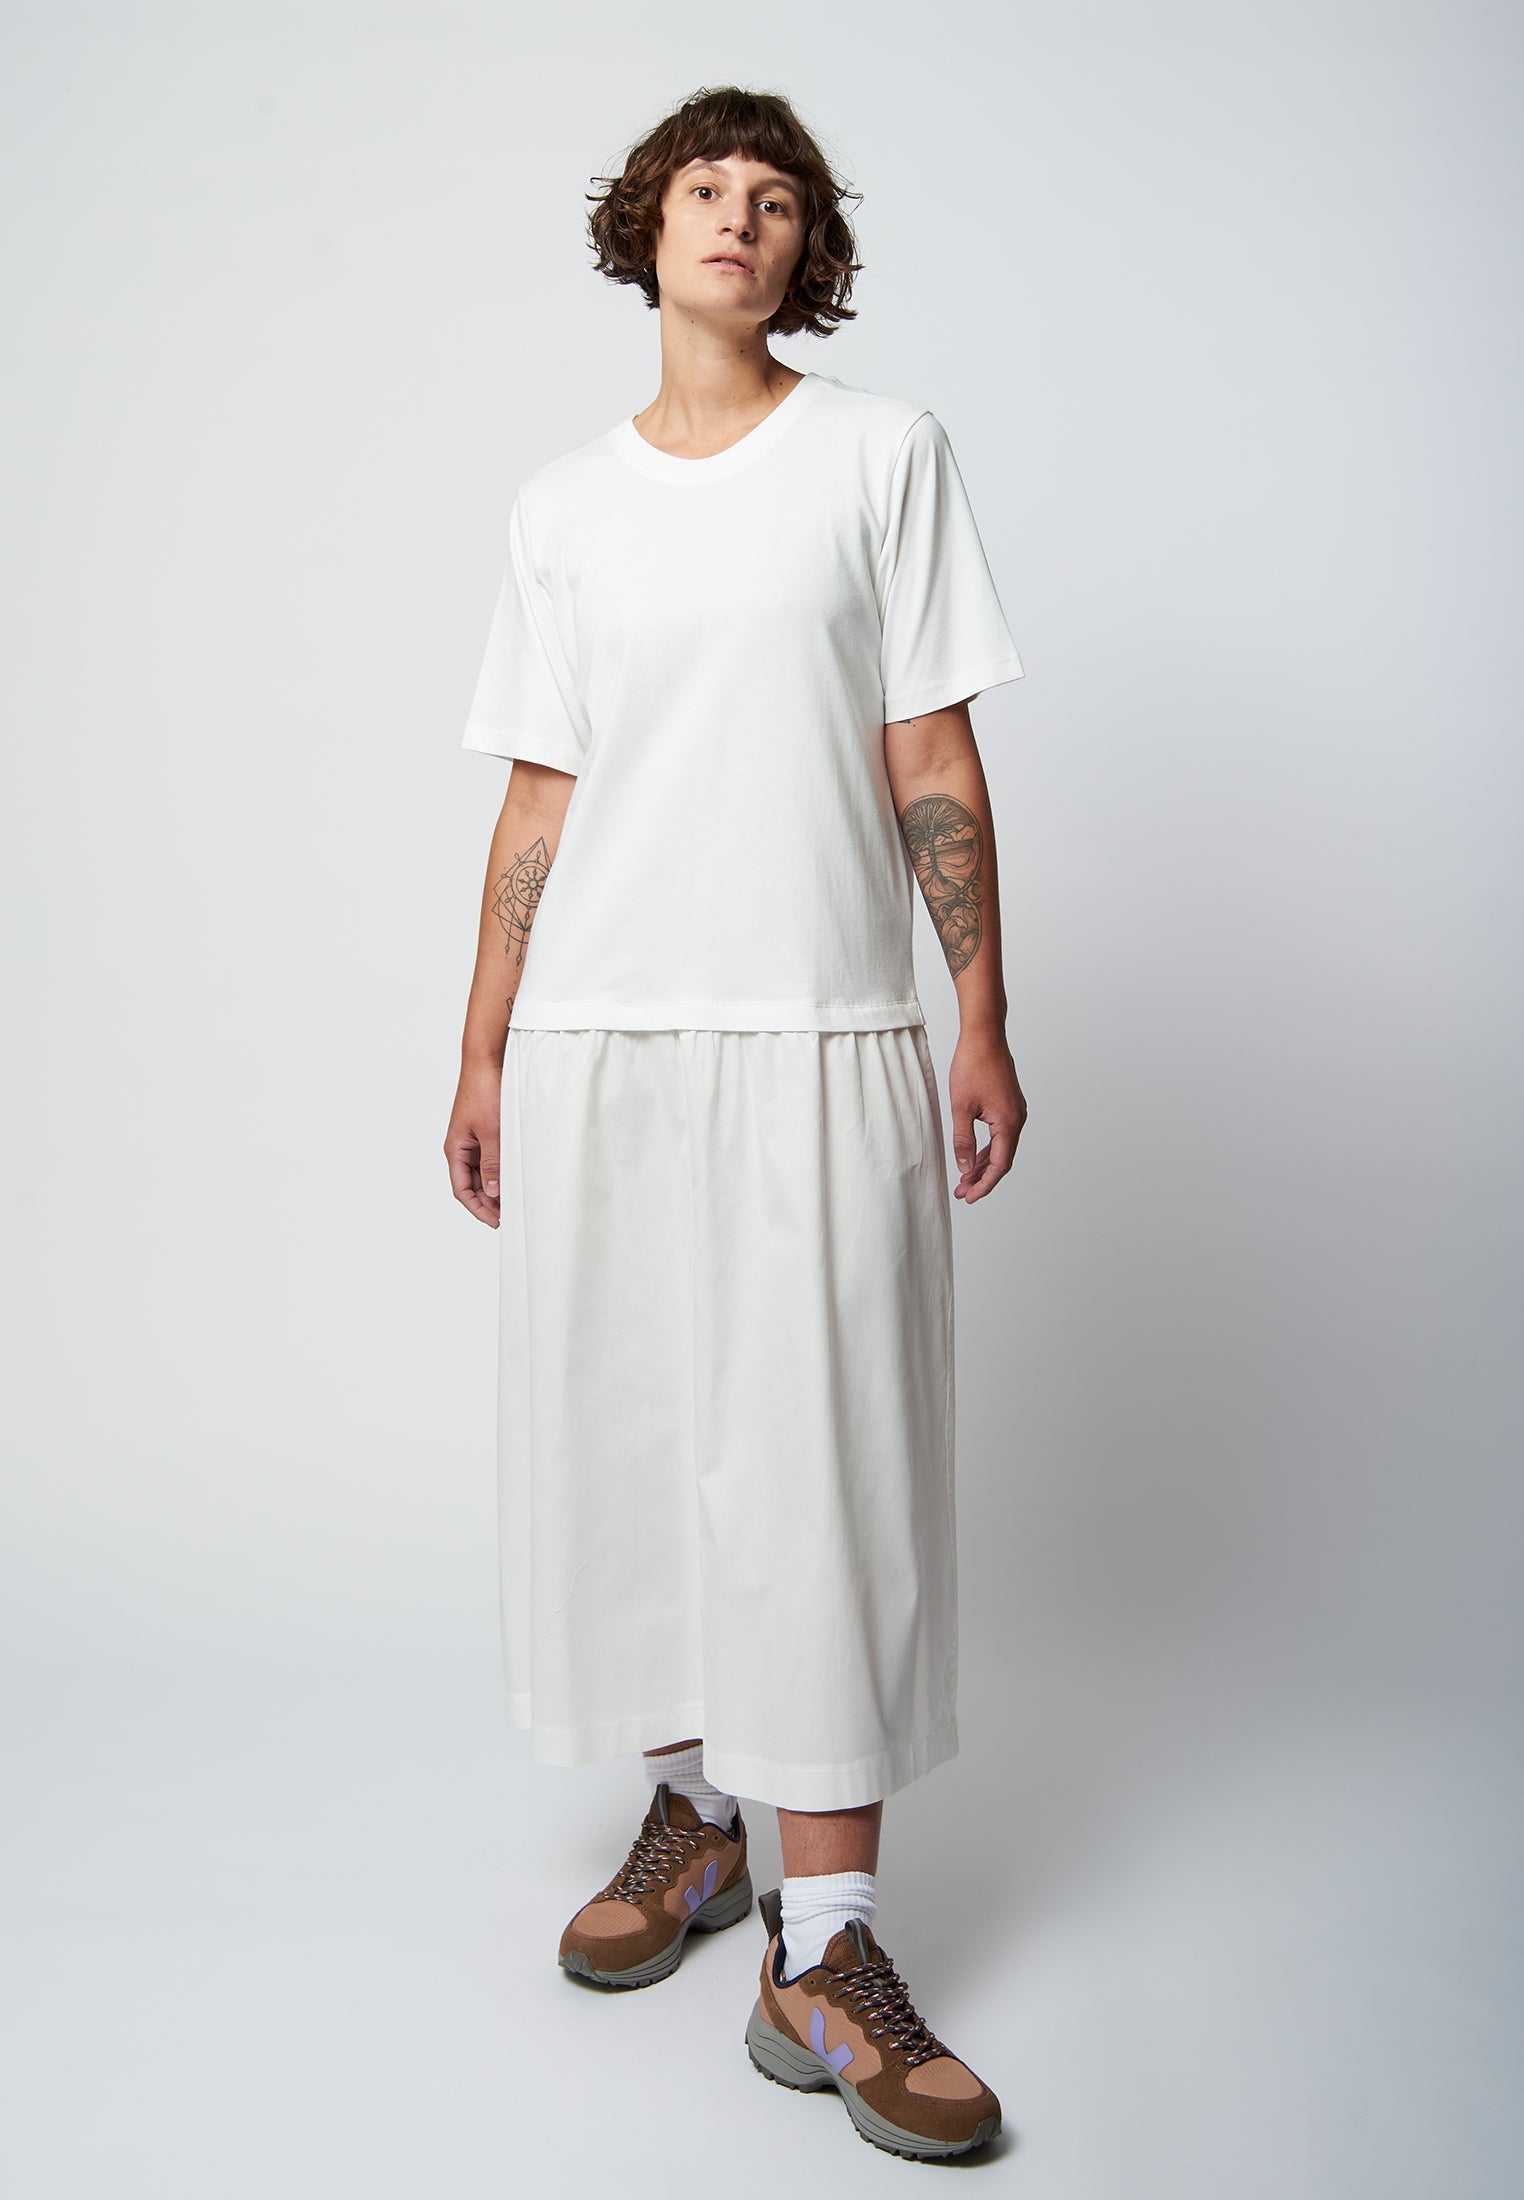 TARA Long t-shirt dress in white